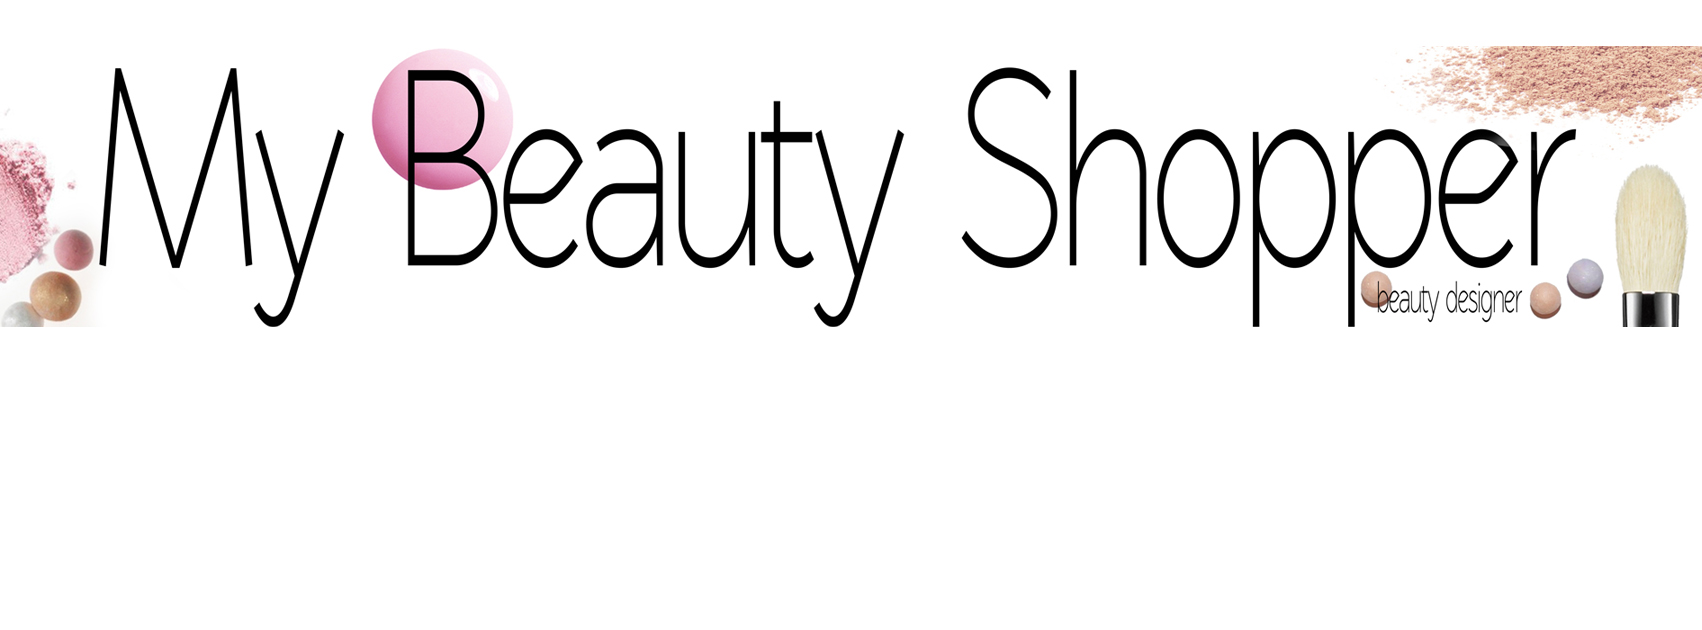 Lisa Eldridge makeup 2021 Seamless Skin